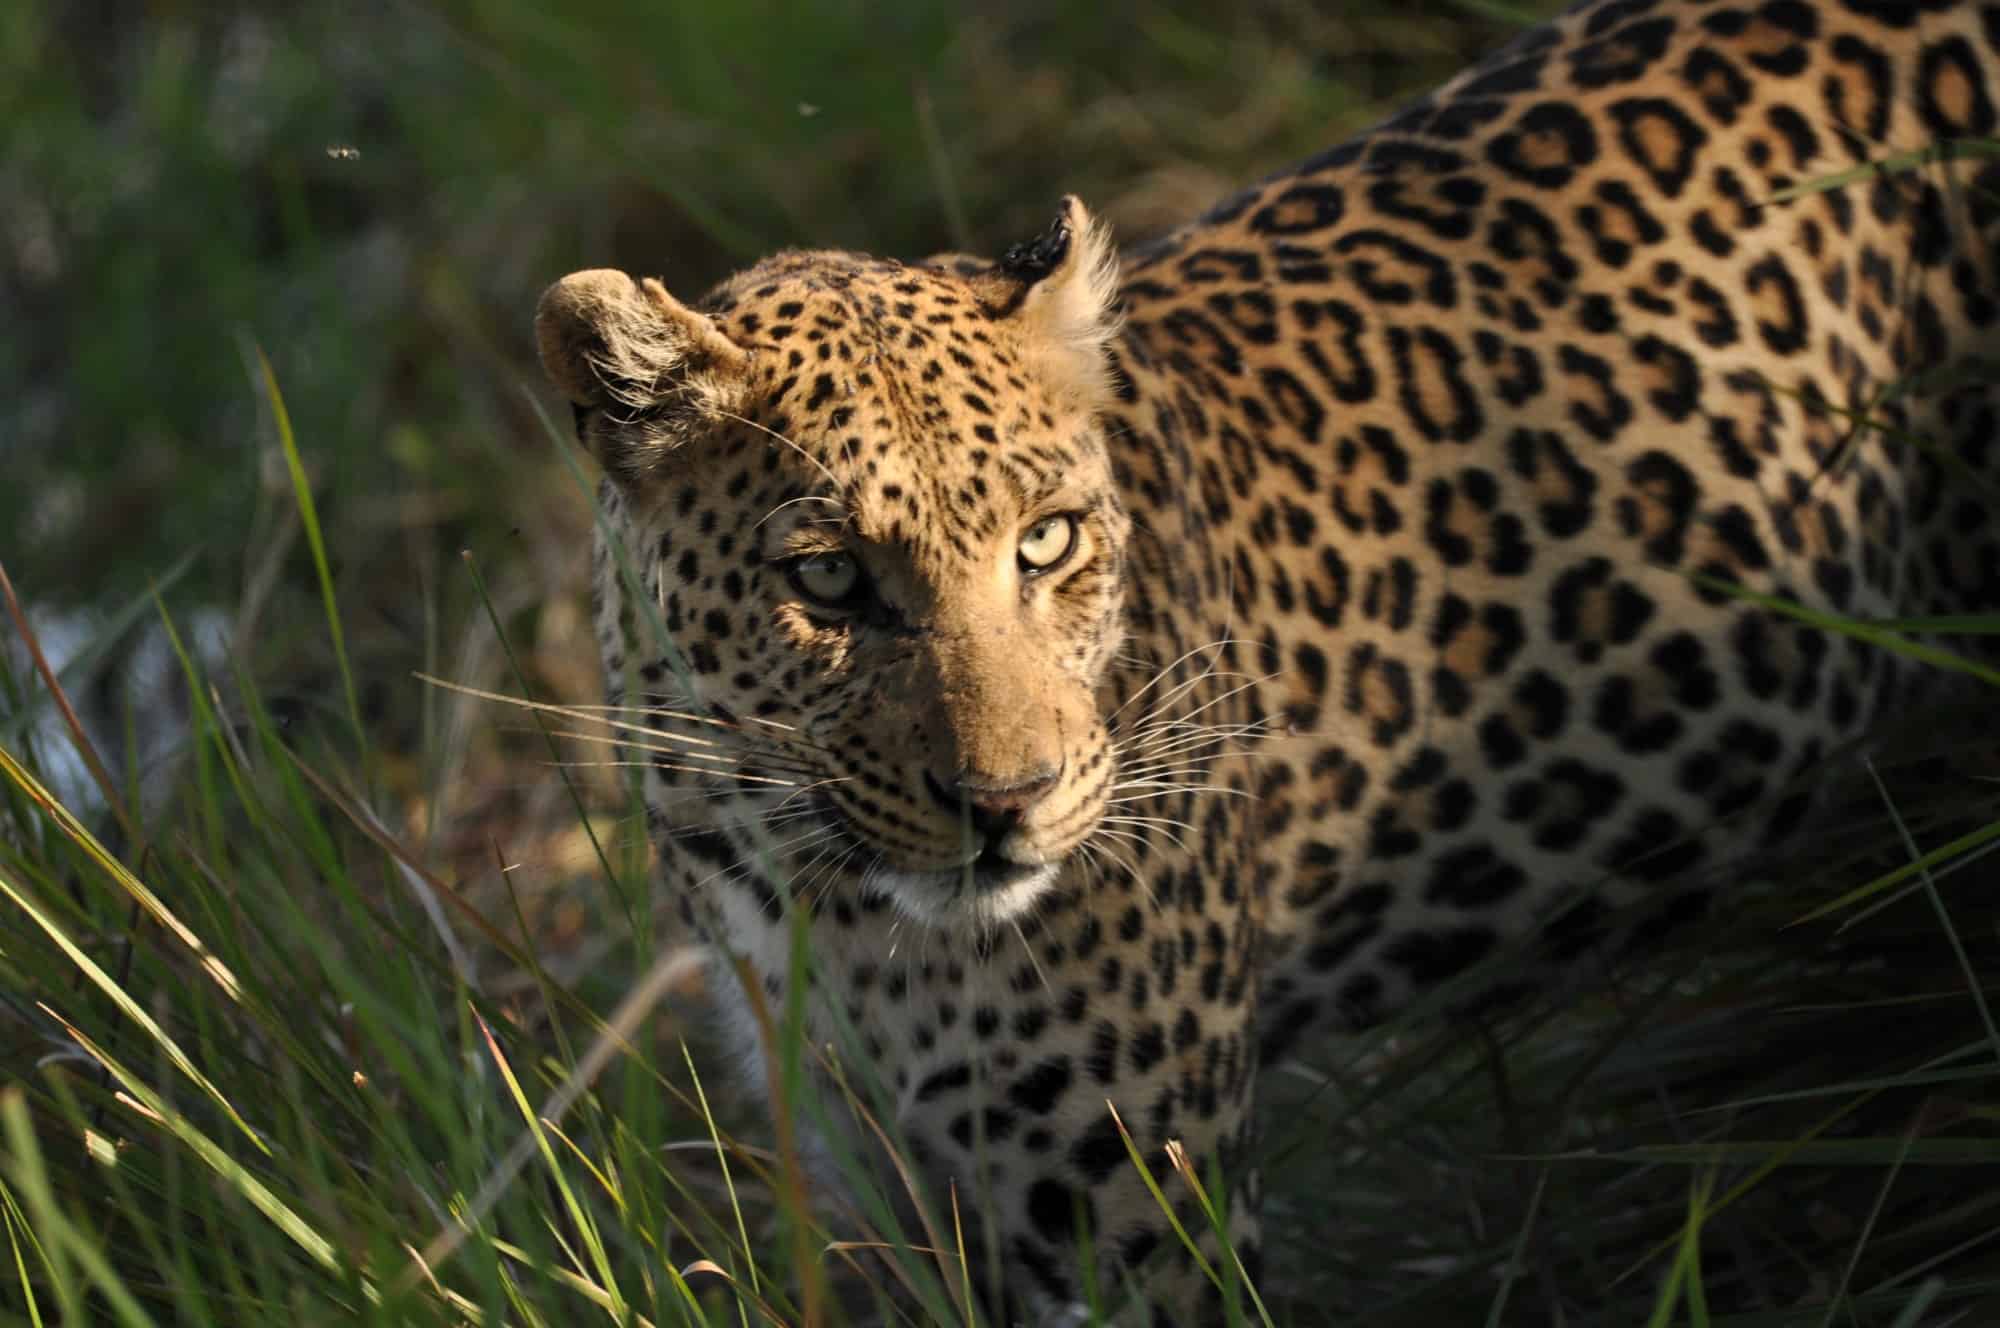 Leopard close-up